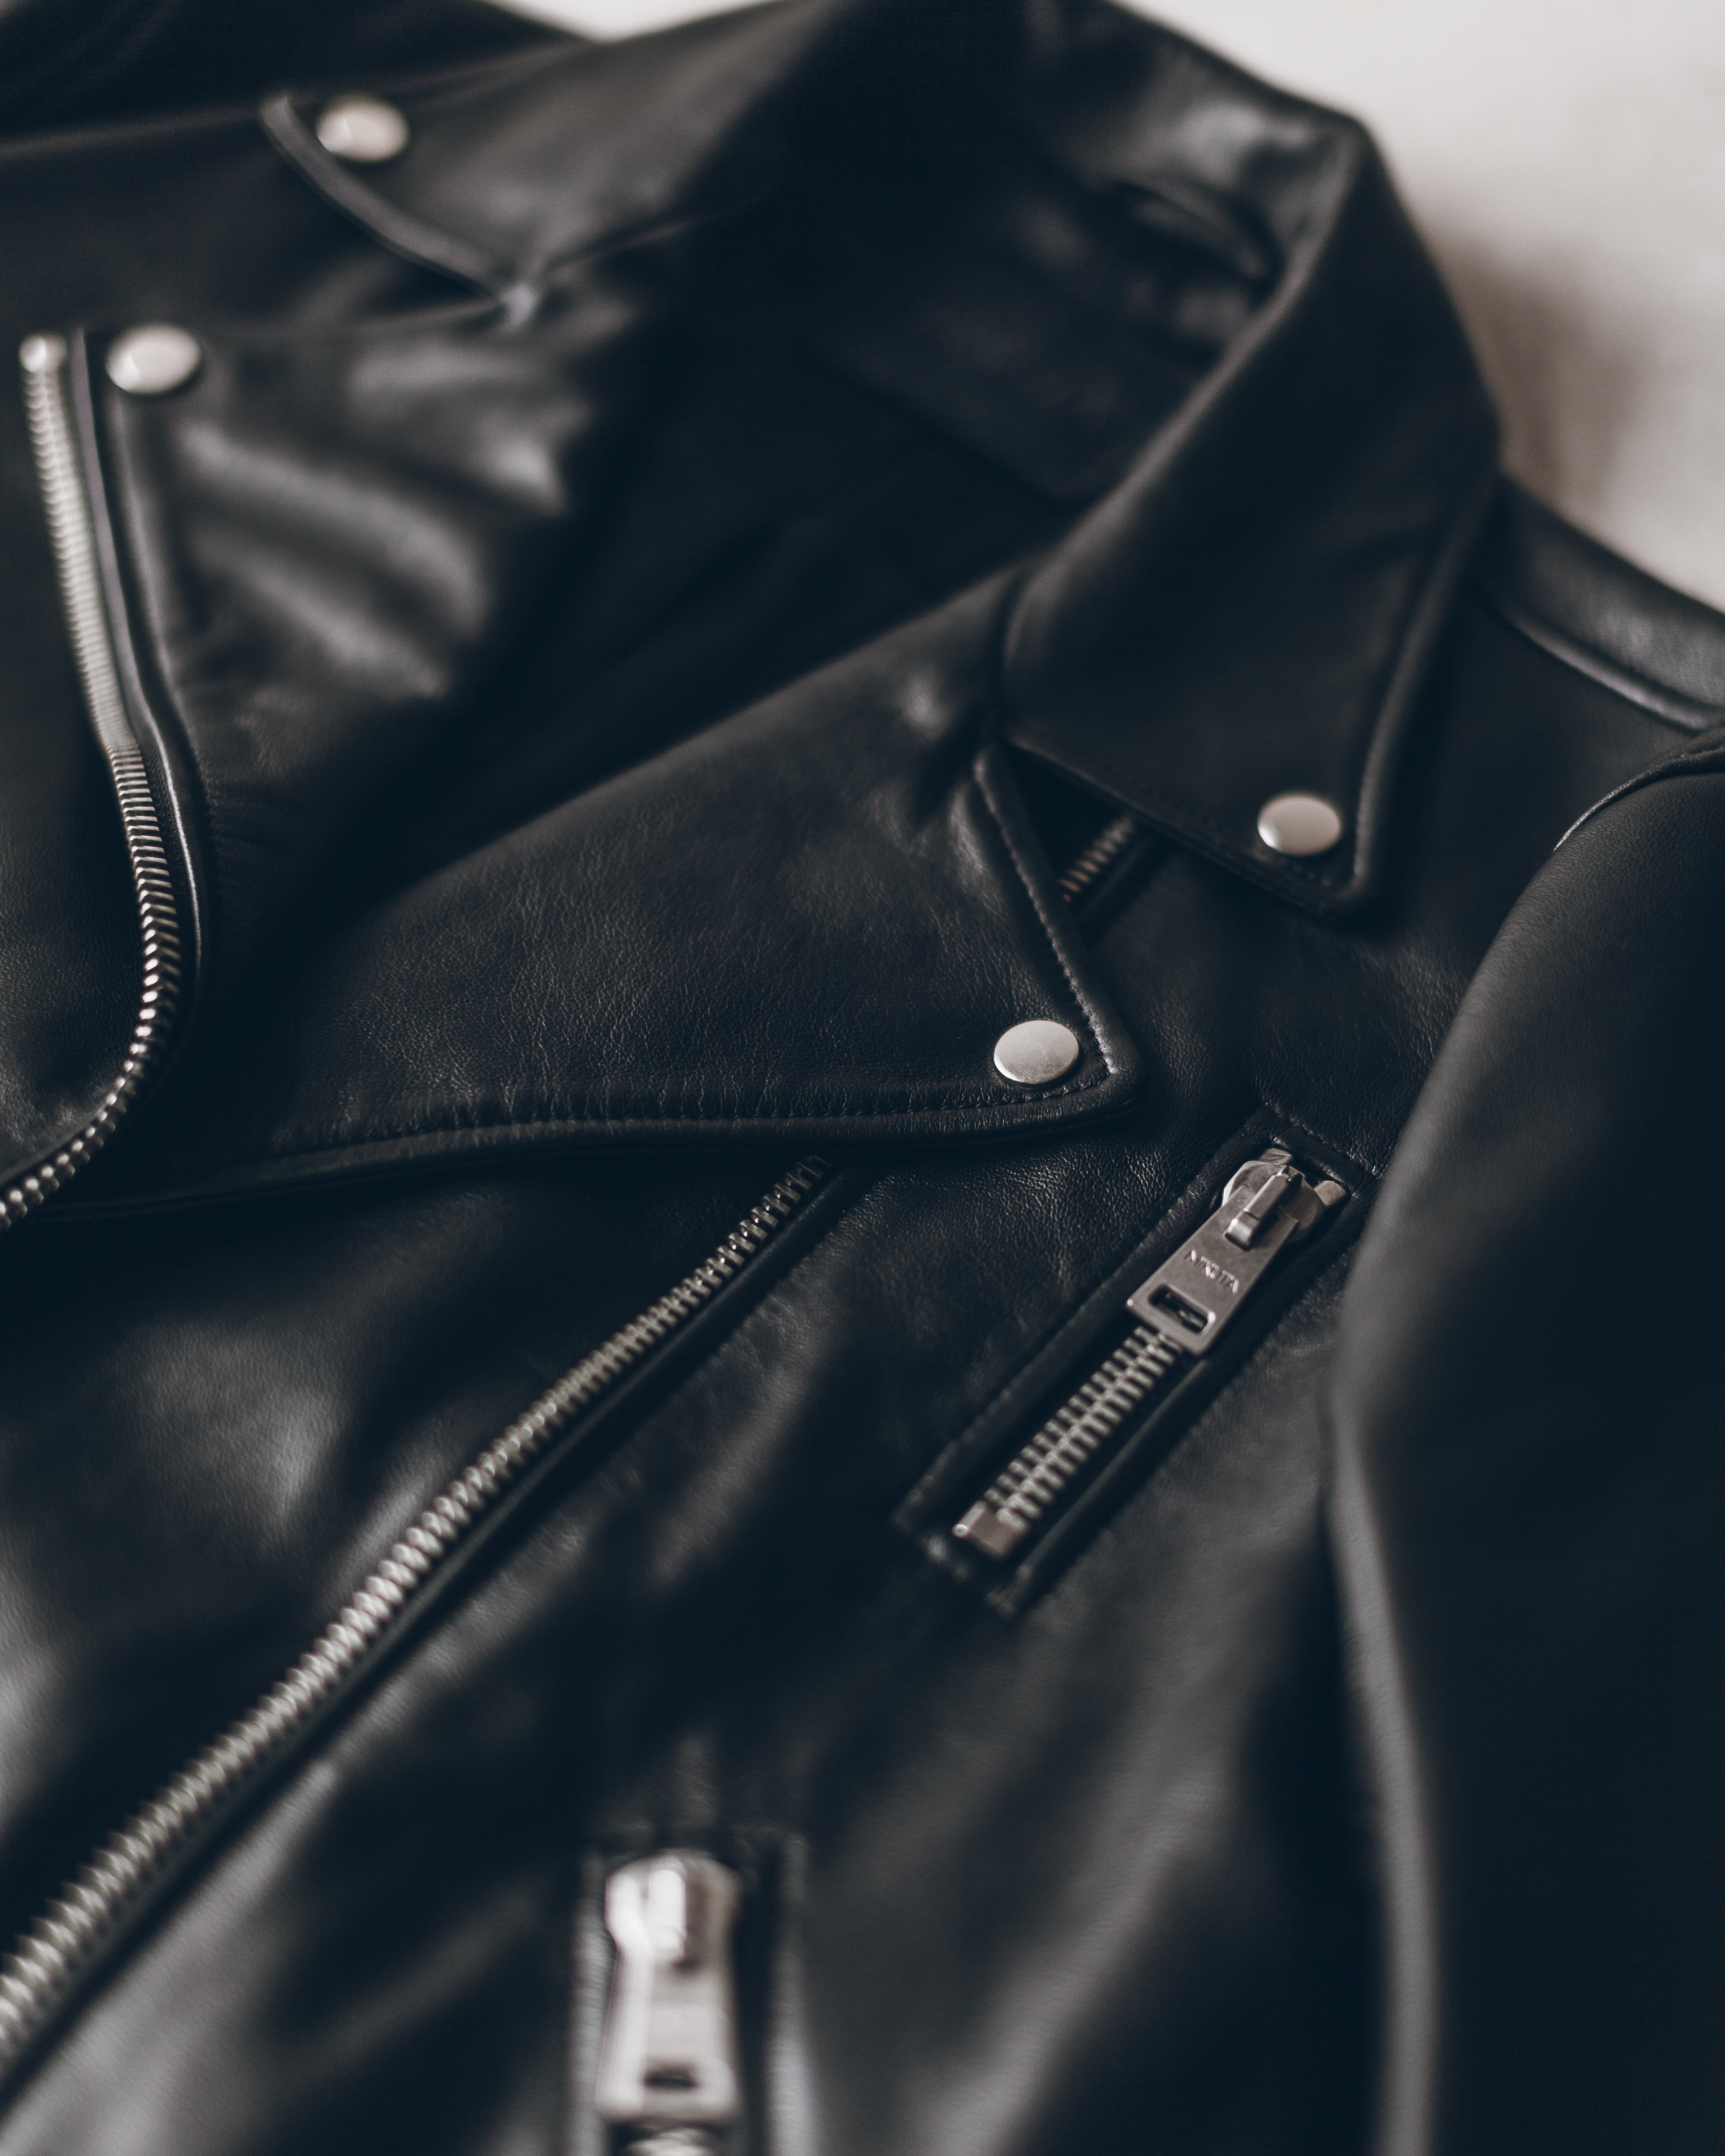 The Leather Jacket – MIKUTA